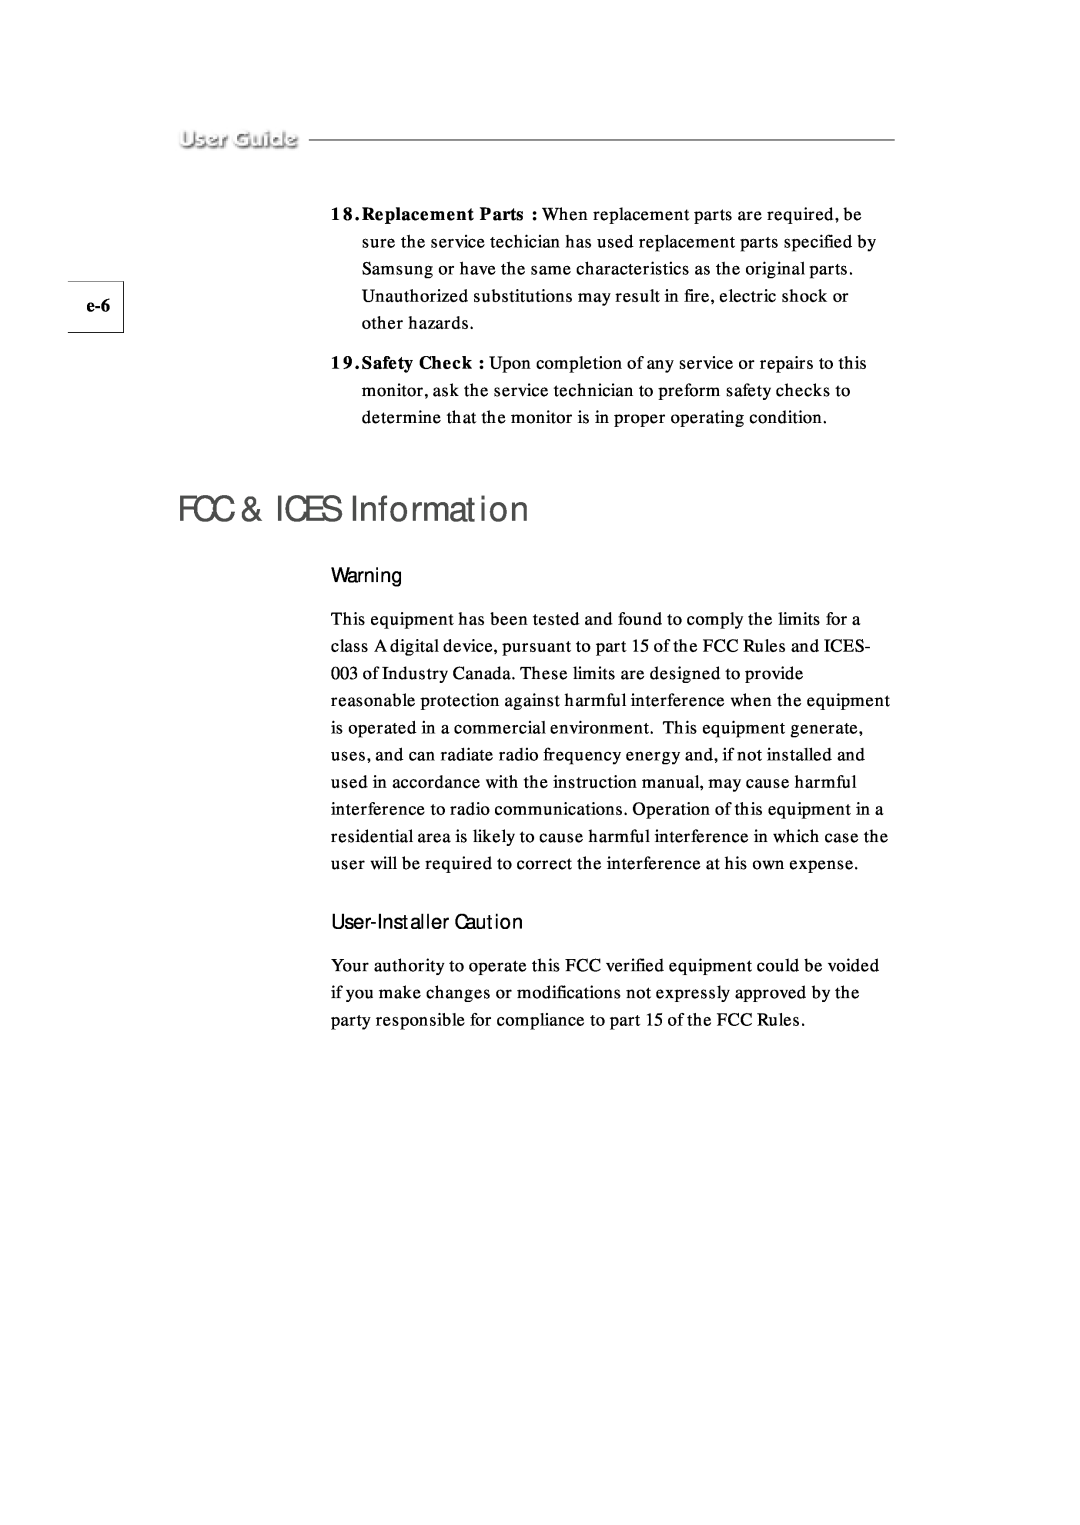 Samsung SMC-210AP manual FCC & ICES Information, User-Installer Caution 